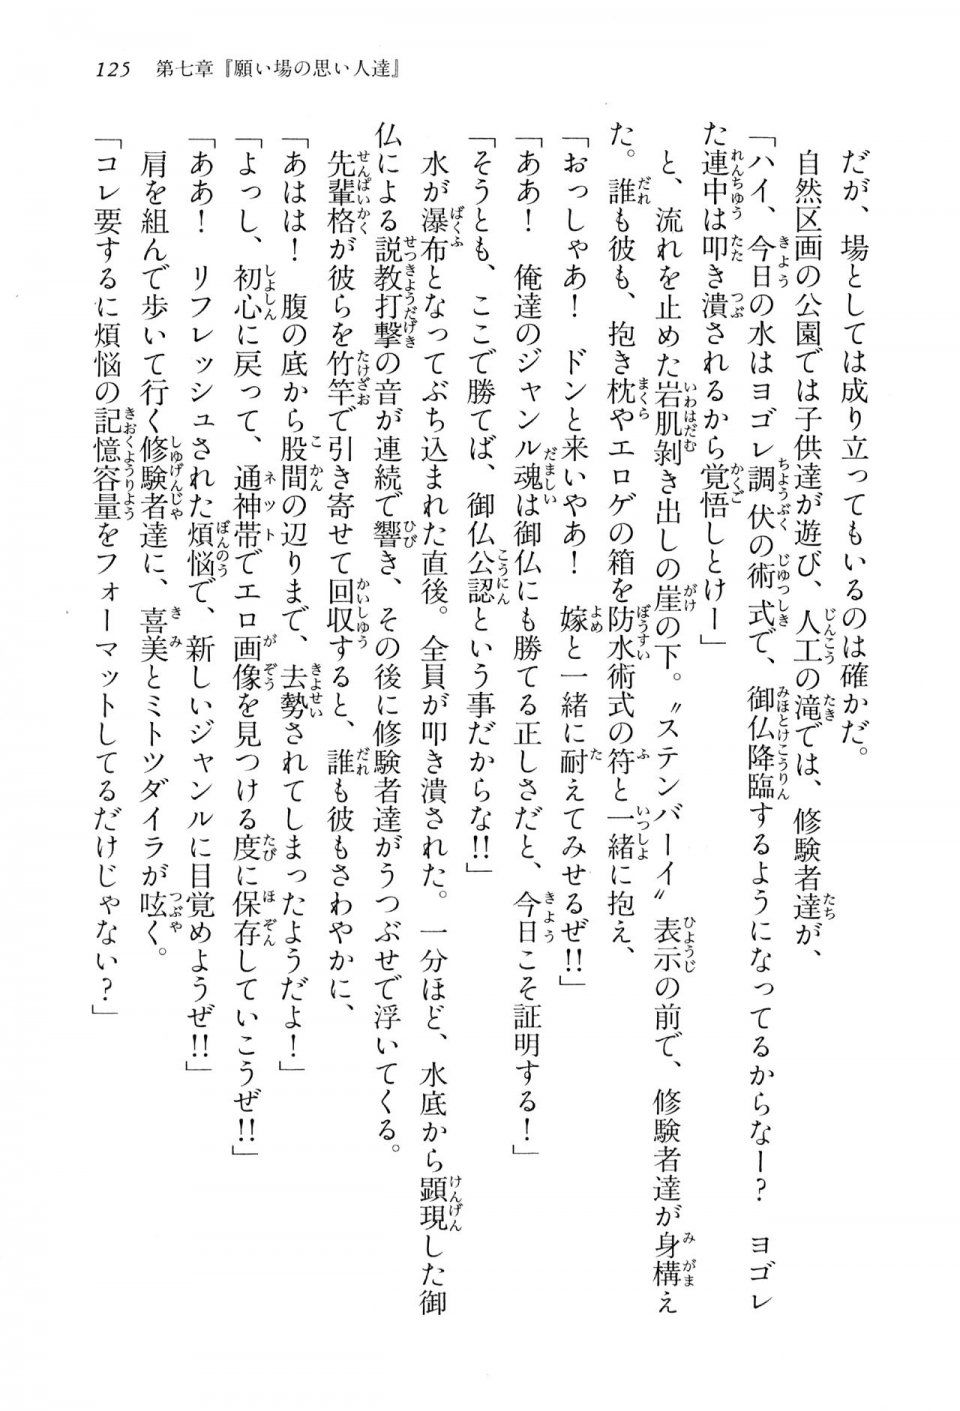 Kyoukai Senjou no Horizon BD Special Mininovel Vol 2(1B) - Photo #129